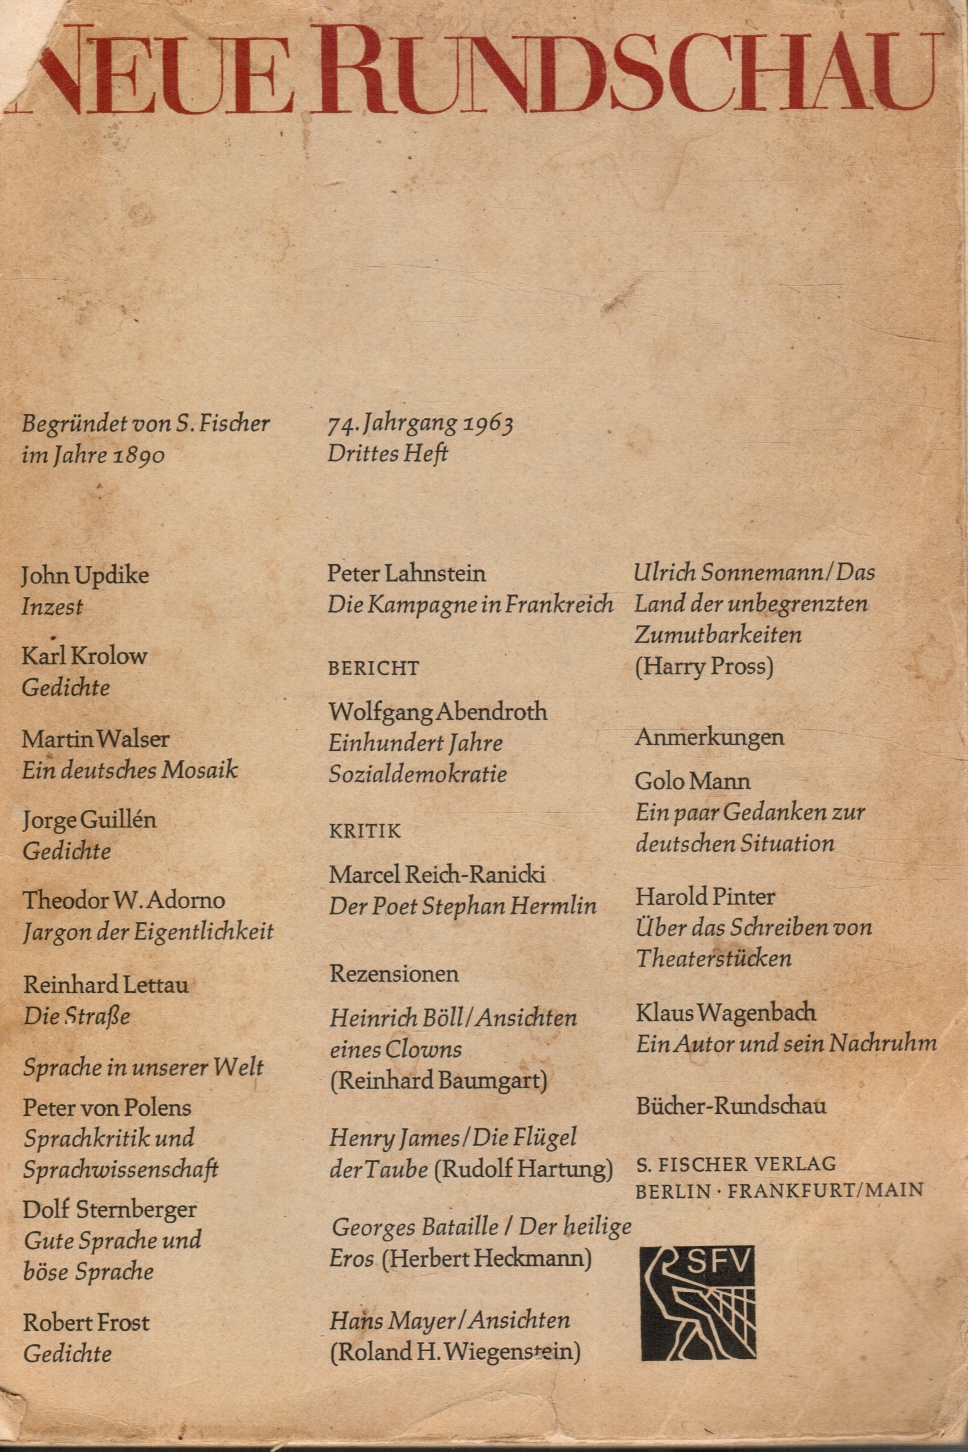 RUDOLF HARTUNG, EDITOR - Neue Rundschau 74 Jahrgang 1963